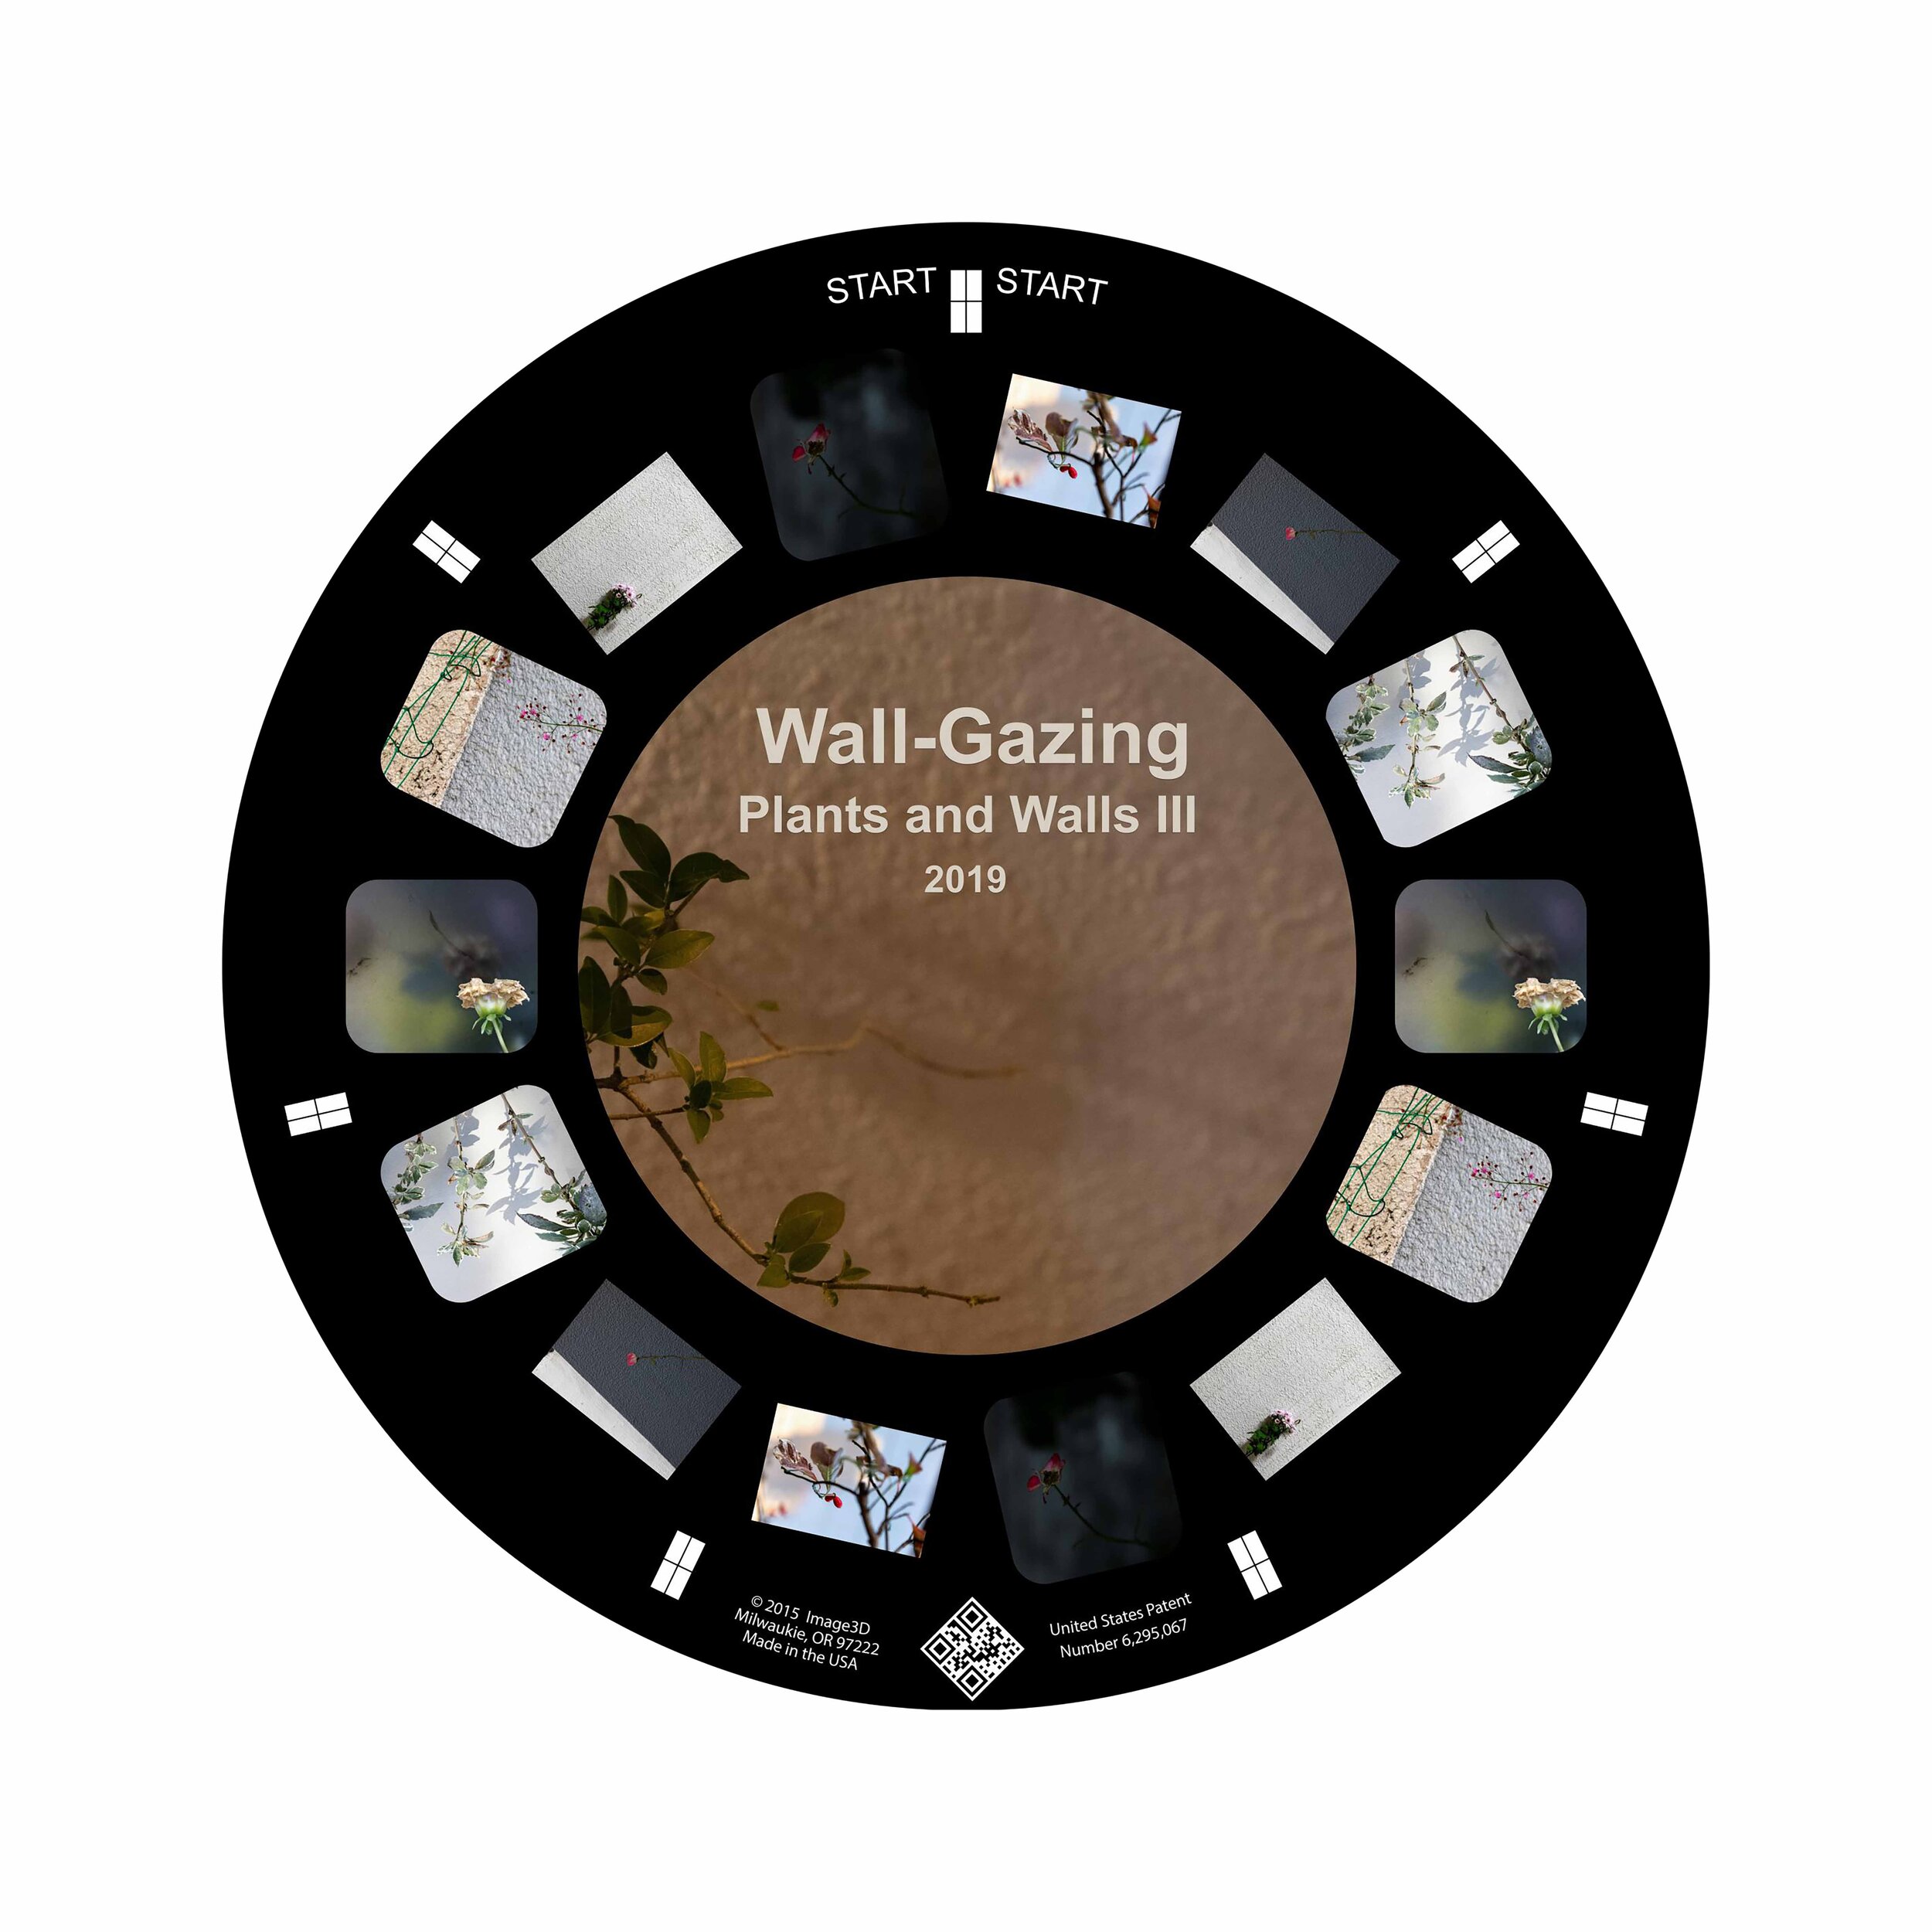 Wall-Gazing – Plants and Walls III, 2019